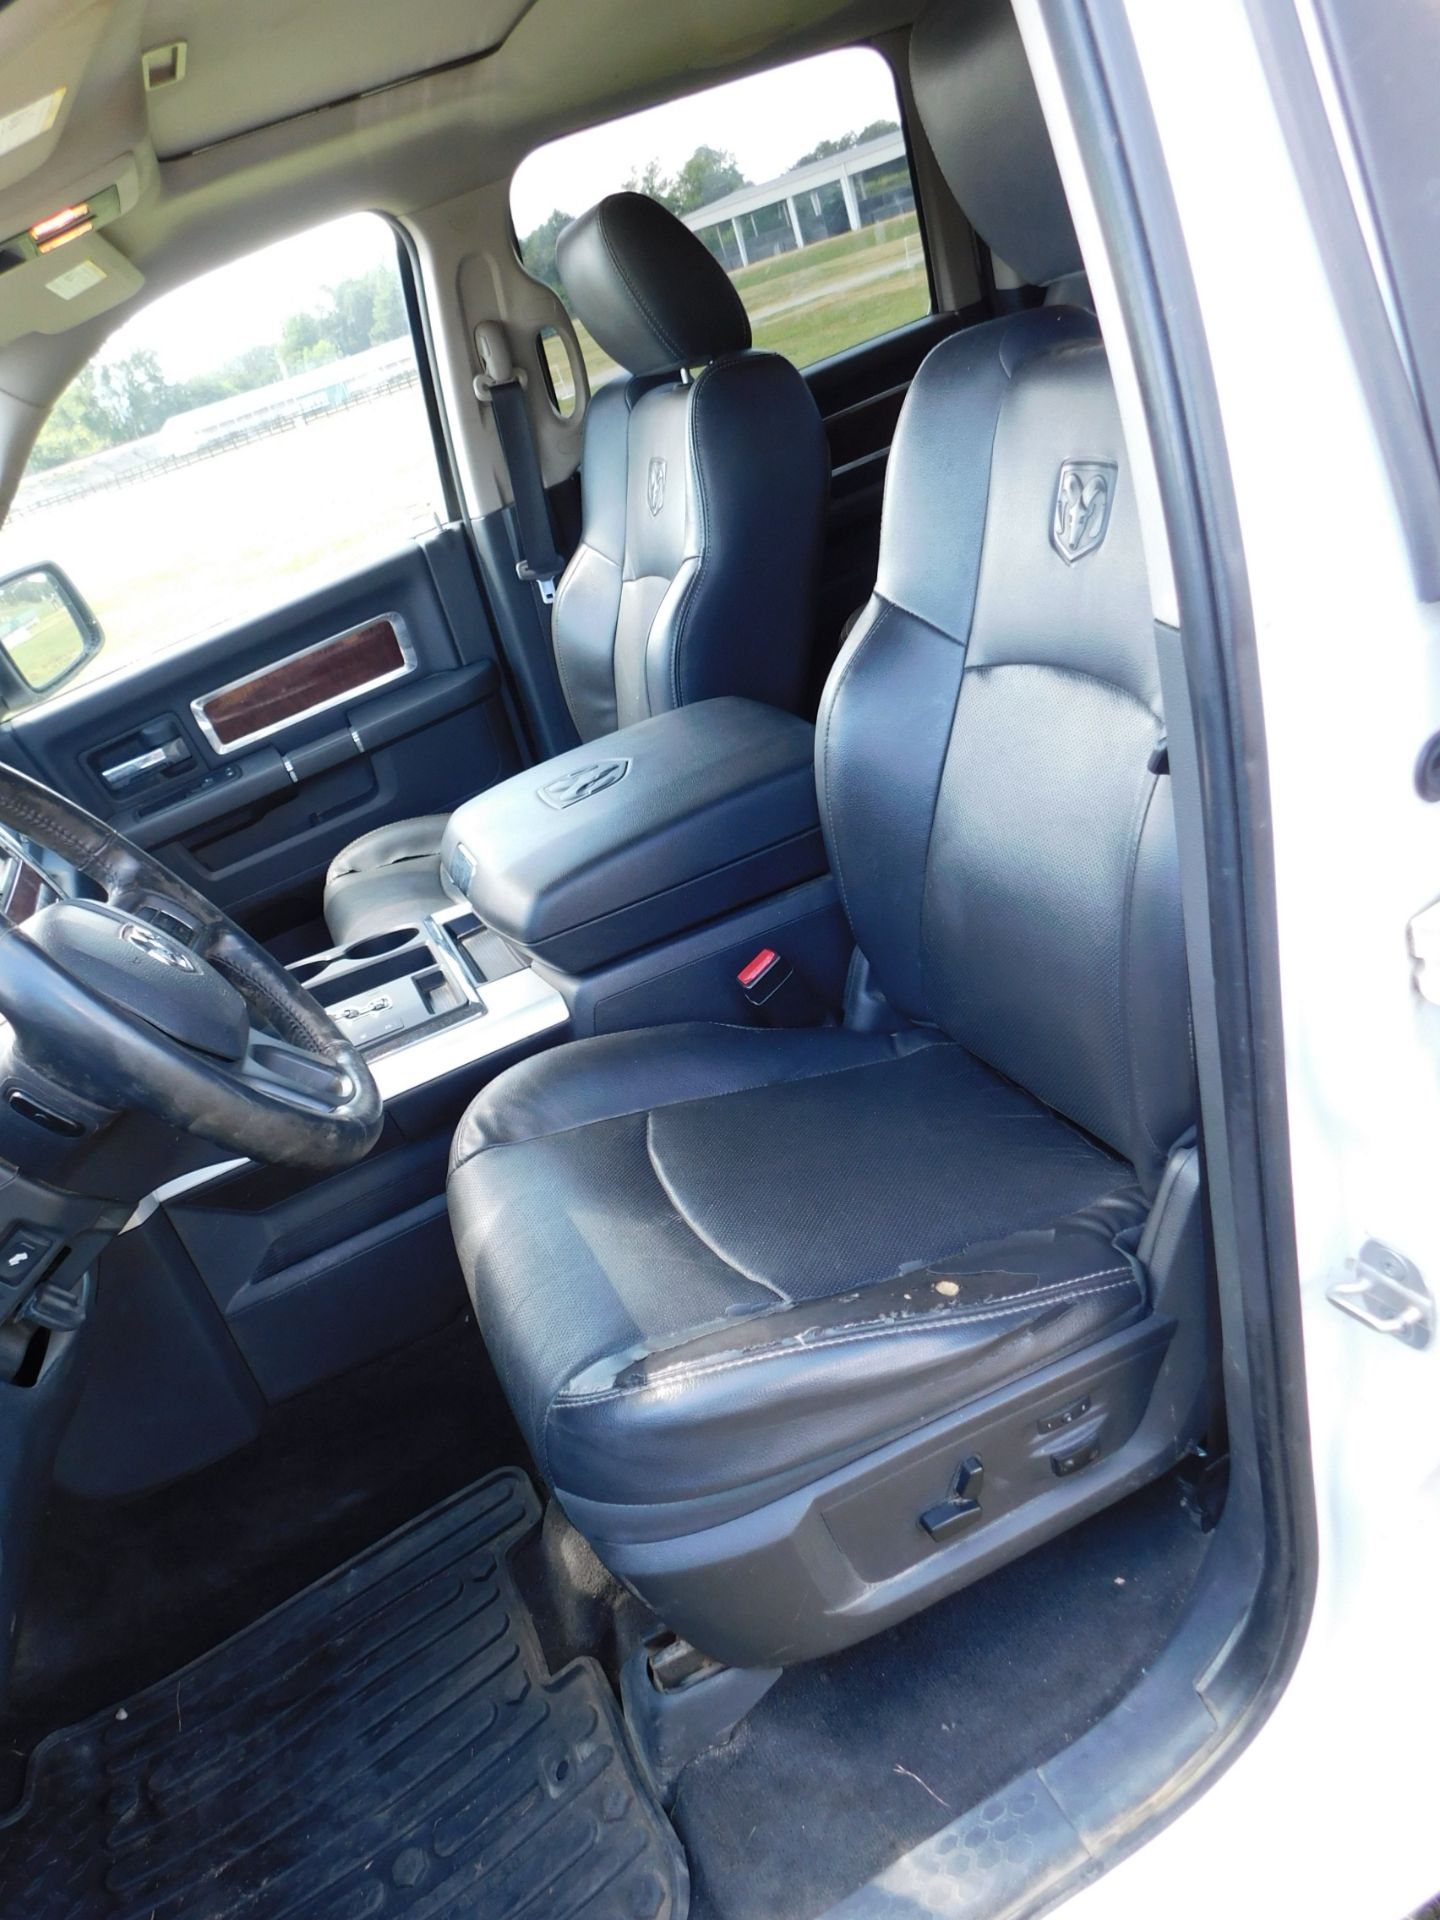 2012 Dodge Ram 1500 Pickup, Crew Cab, 6' Bed, Automatic, 4 WD, AM/FM,AC, PL, PW, Hemi 5.7 L - Image 26 of 53